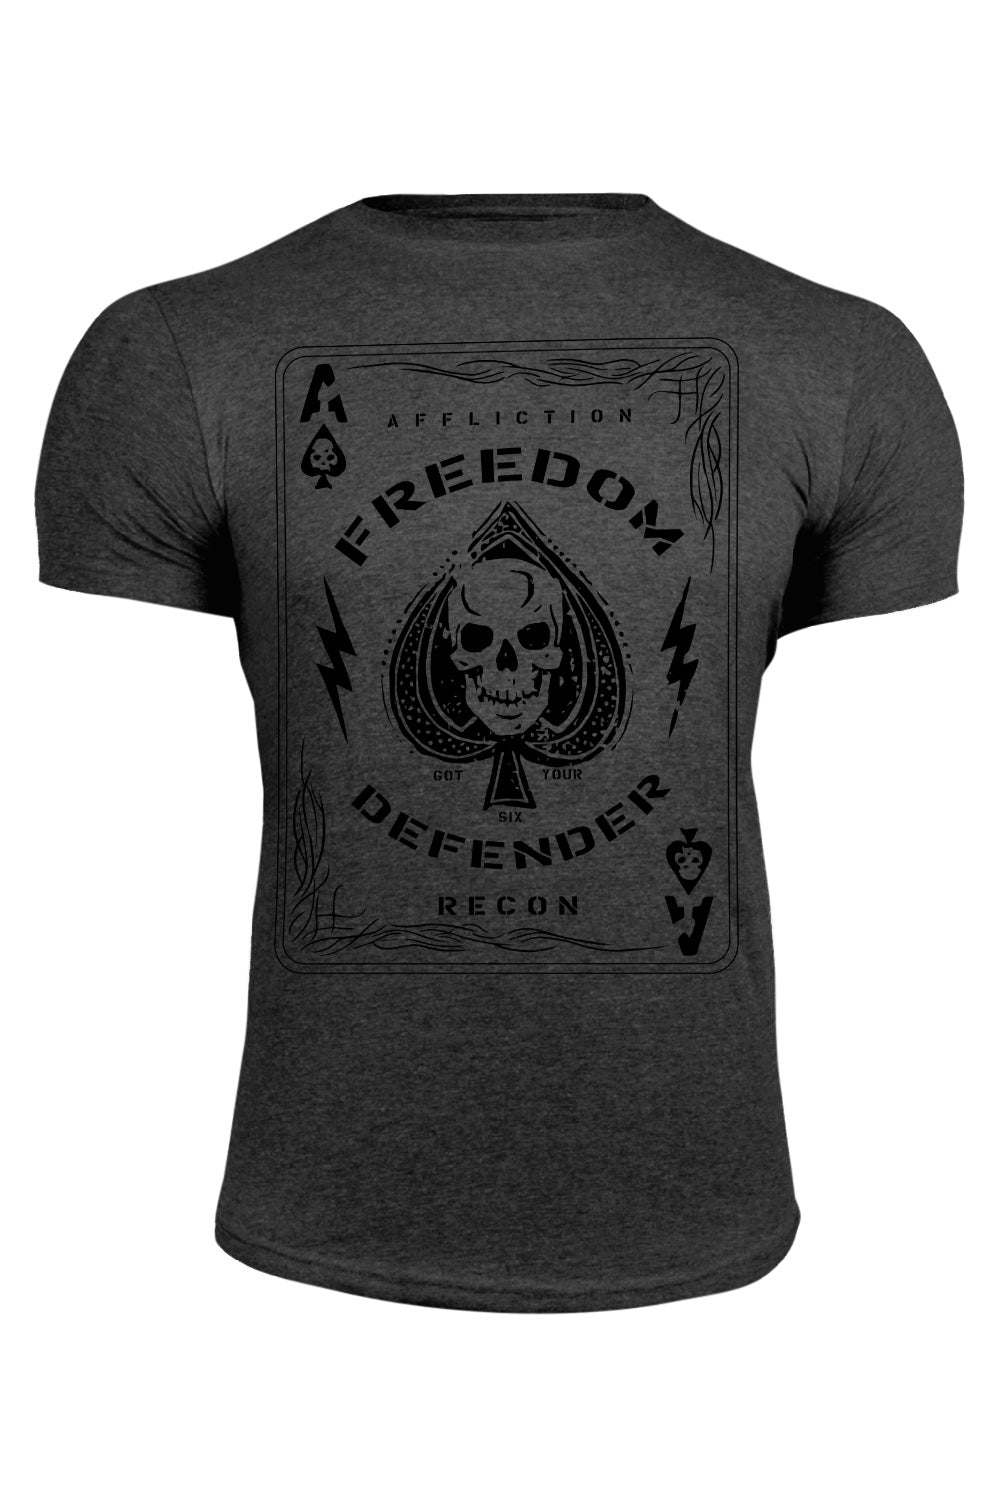 Gray FREEDOM Playing Card Skull Graphic Print Men's T Shirt Men's Tops JT's Designer Fashion